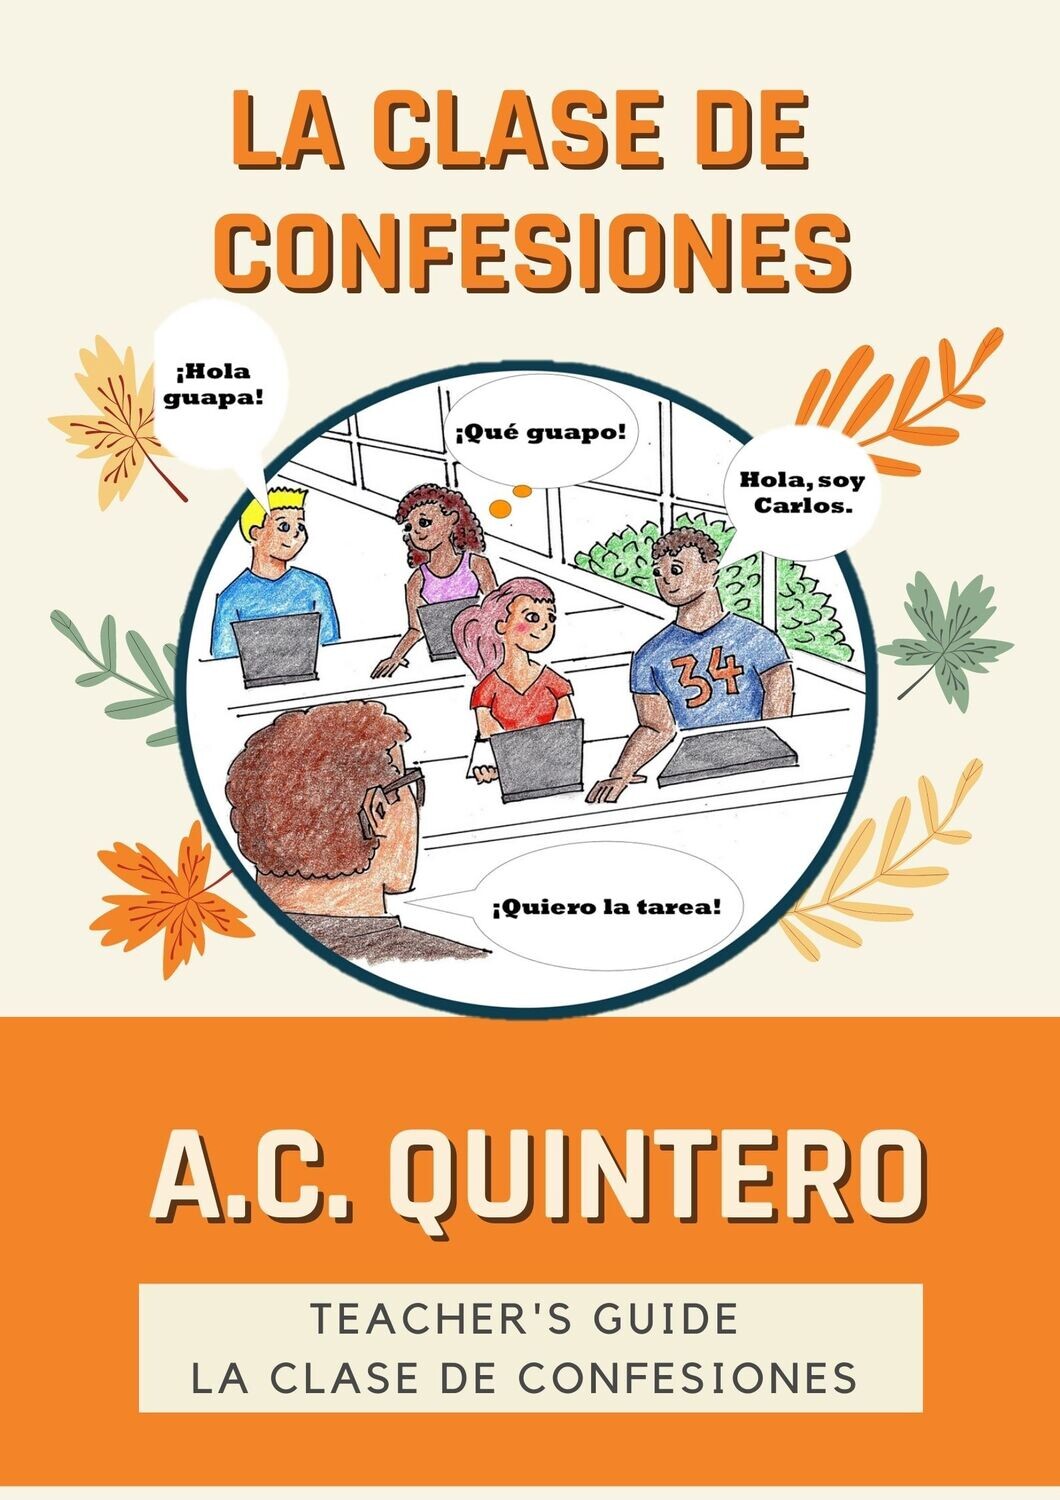 Teacher's Manual -La clase de confesiones 50+ Activities